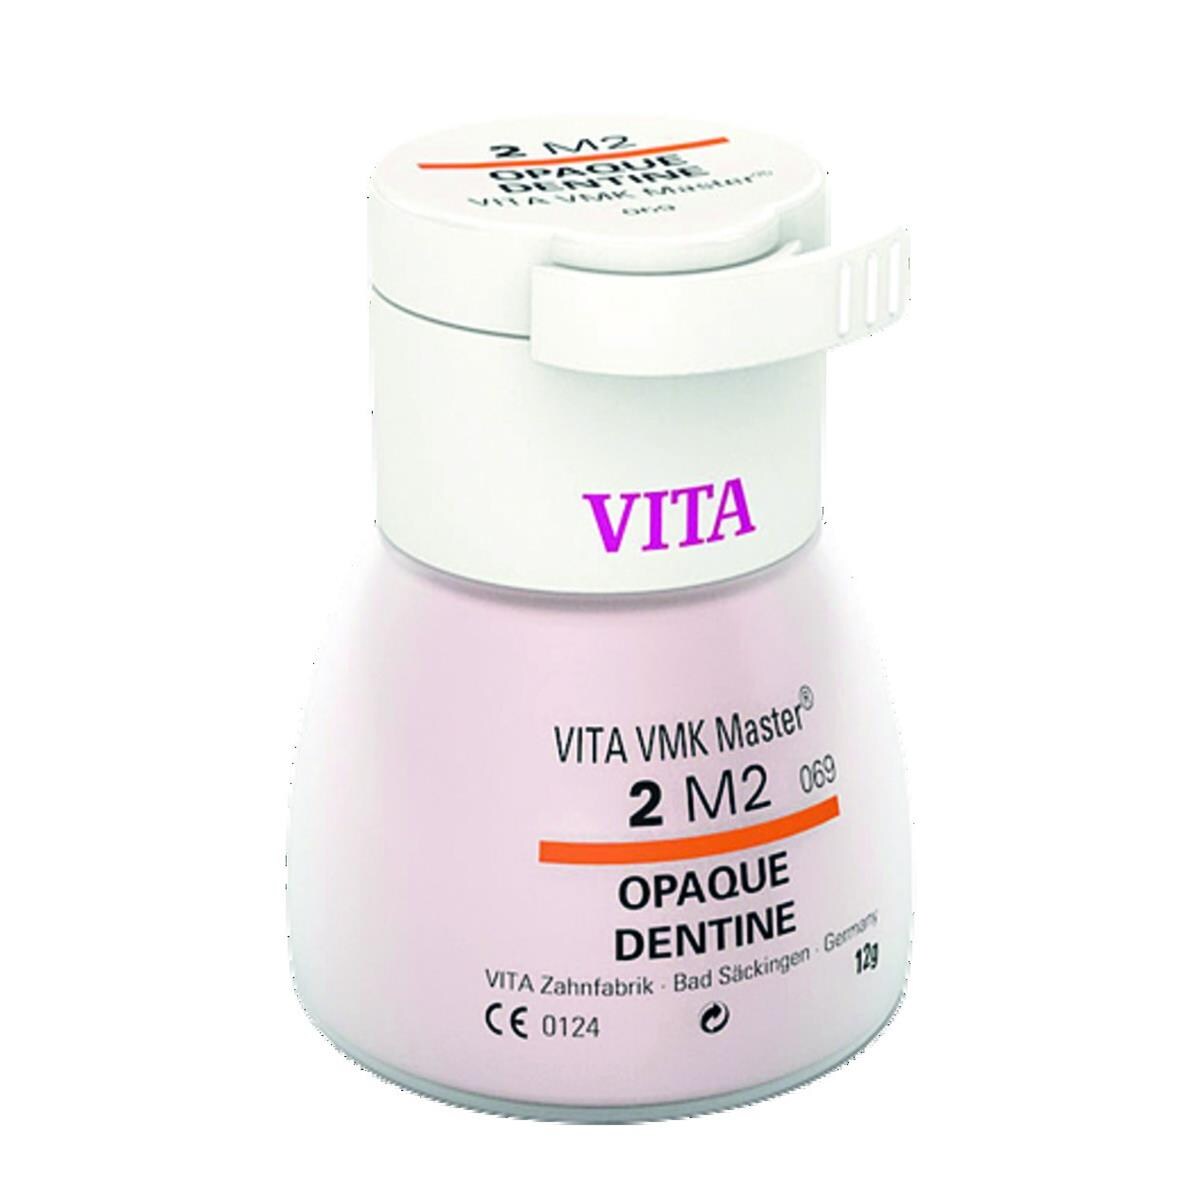 VMK Master VITA - Dentine Opaque - 3M1 - Le flacon de 12 g